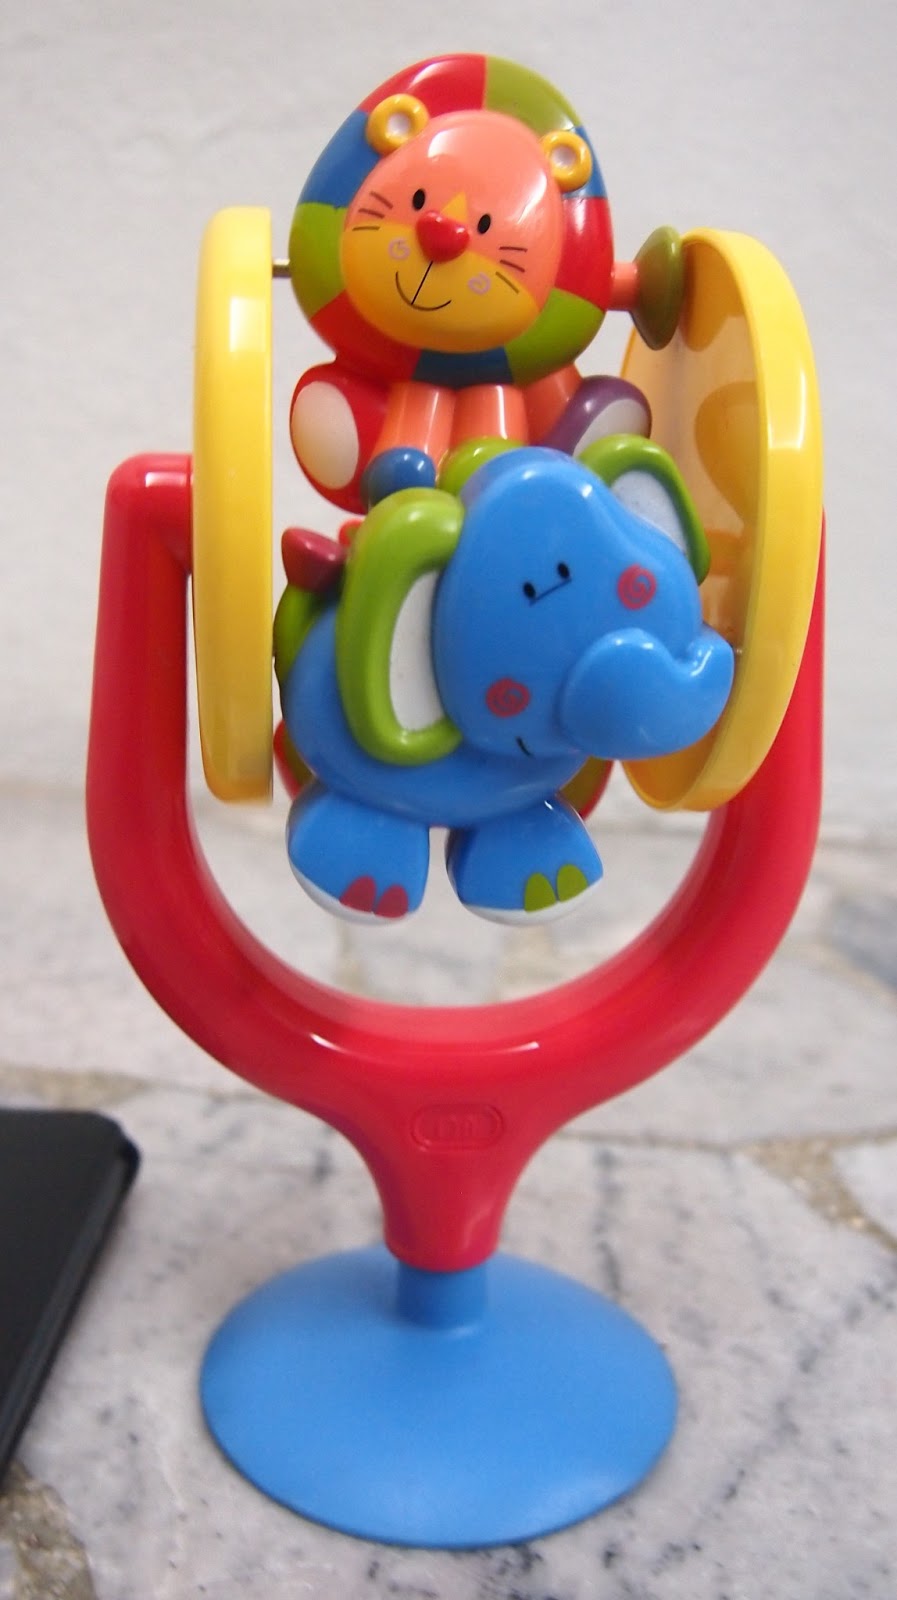 JuaiMurah Mothercare Animal Spinning High Chair Toy